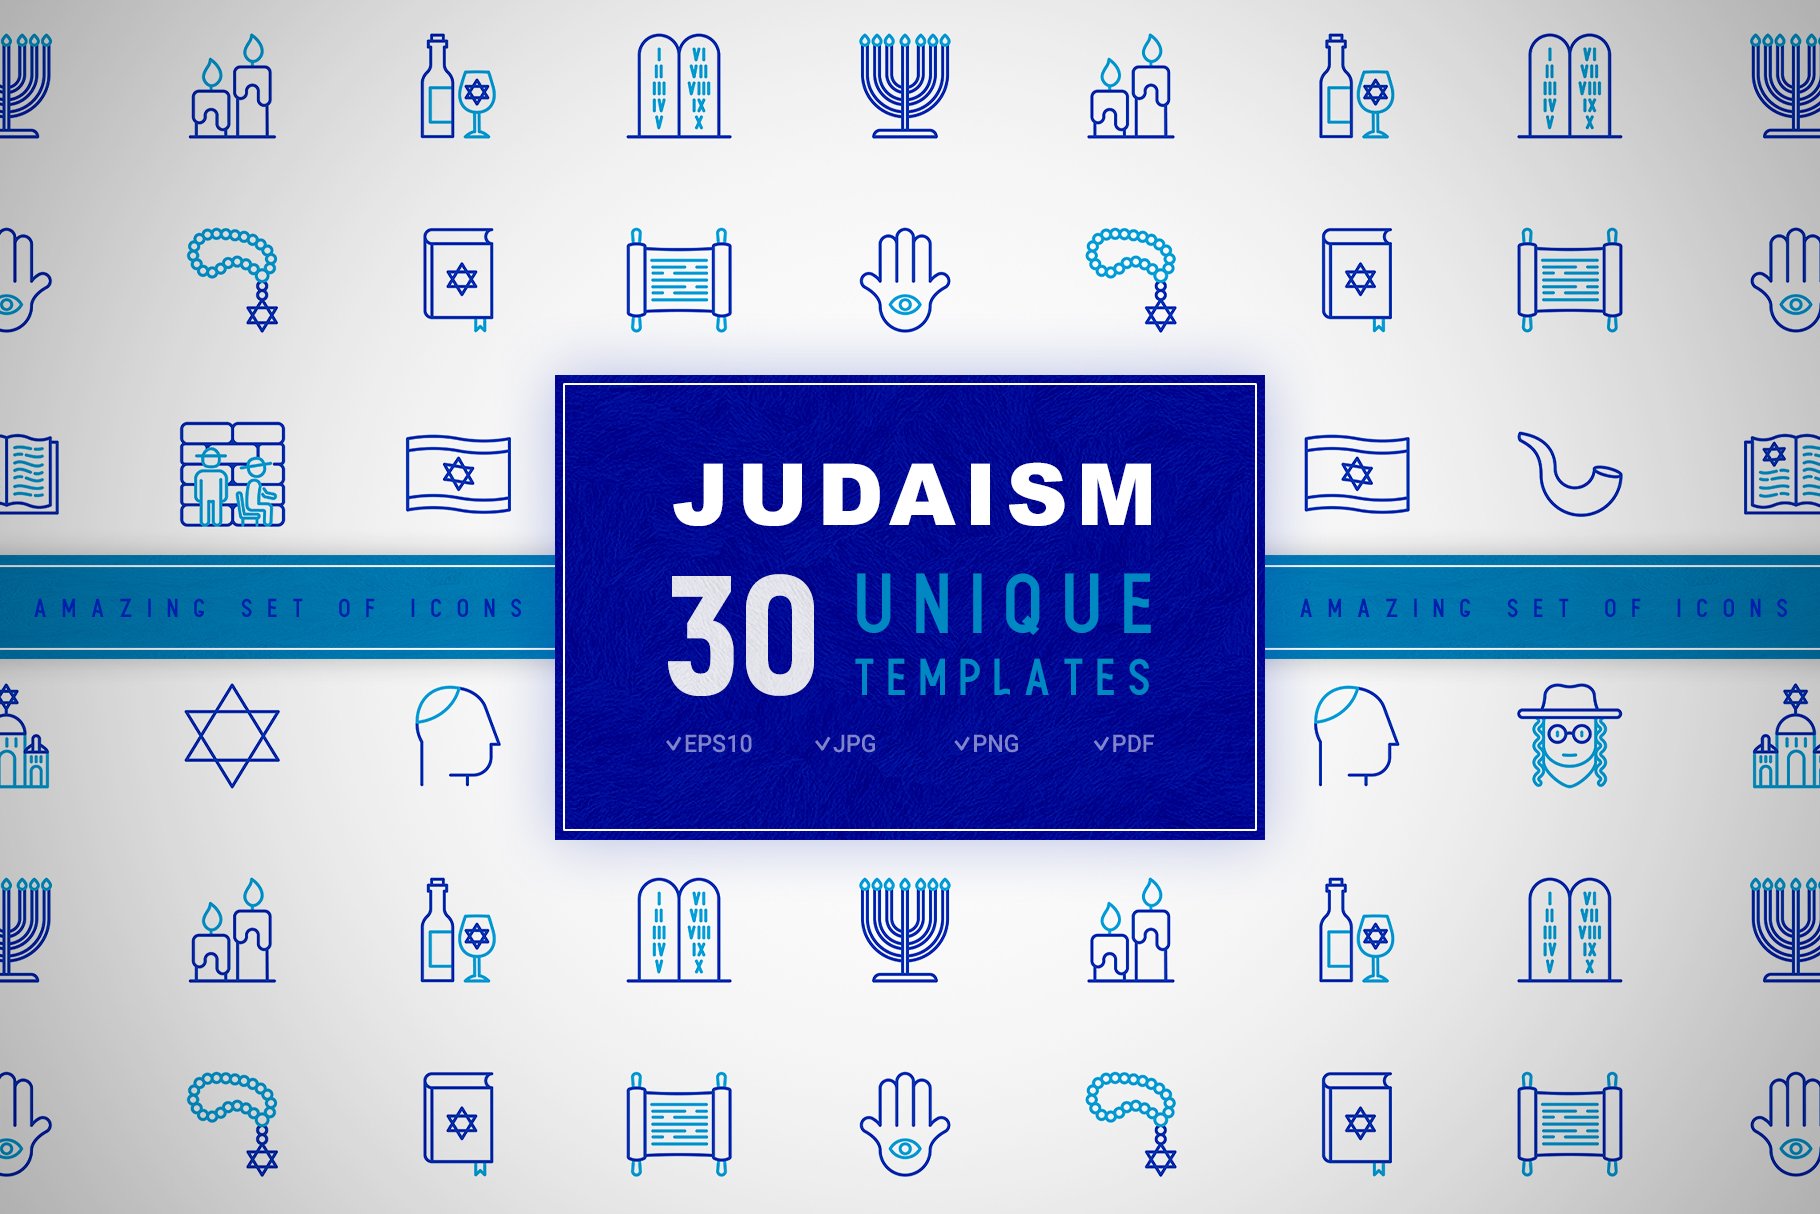 Judaism Icons Set | Concept cover image.